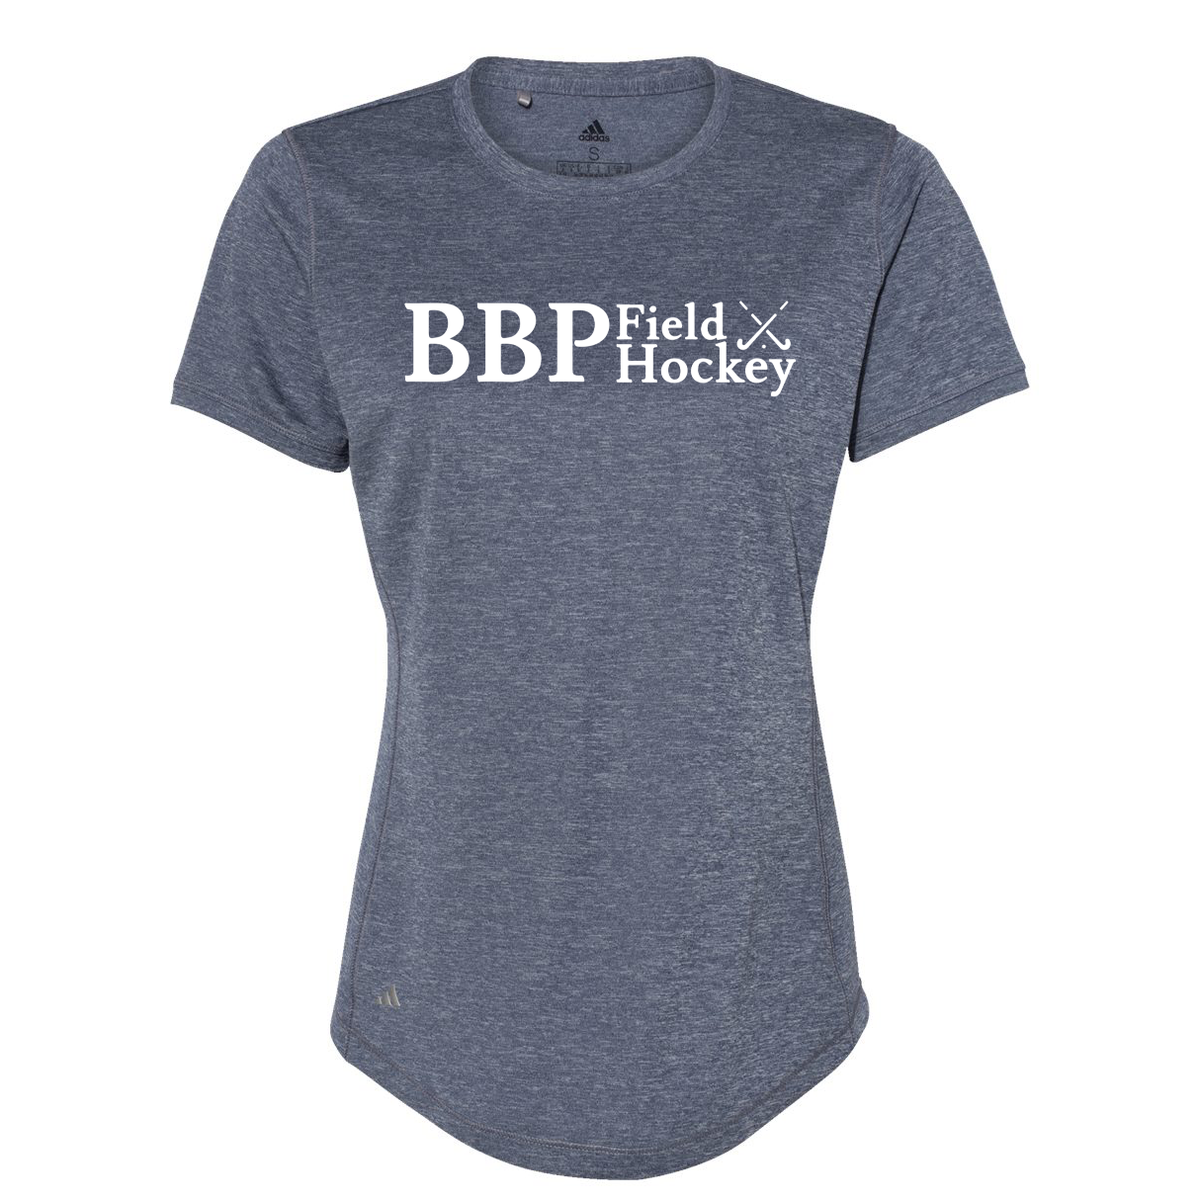 BBP Field Hockey Women's Adidas Sport T-Shirt